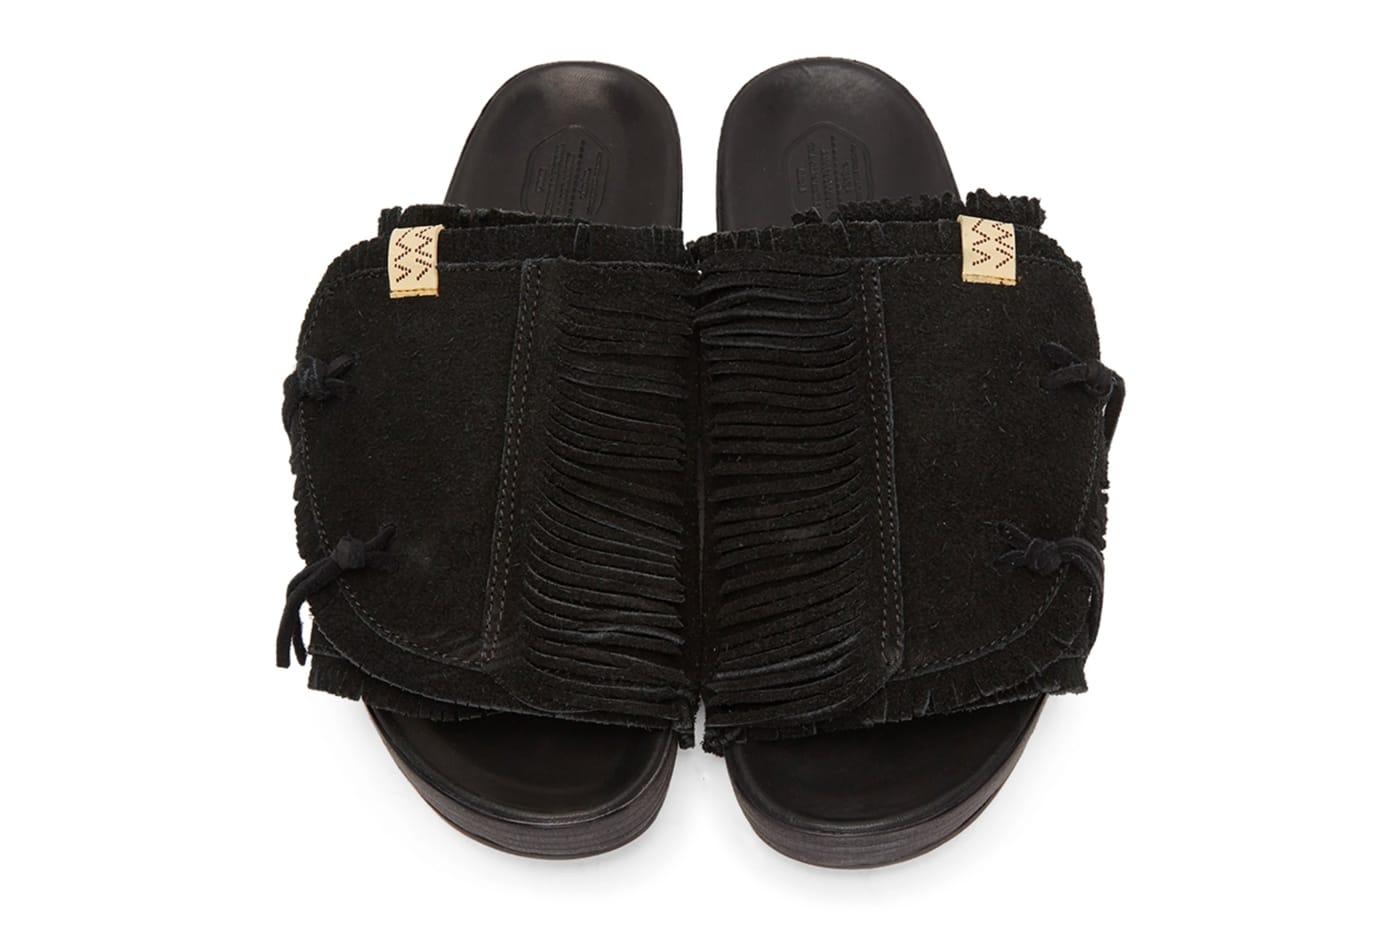 visvim Christo Shaman Folk Sandals in Black | Hypebeast